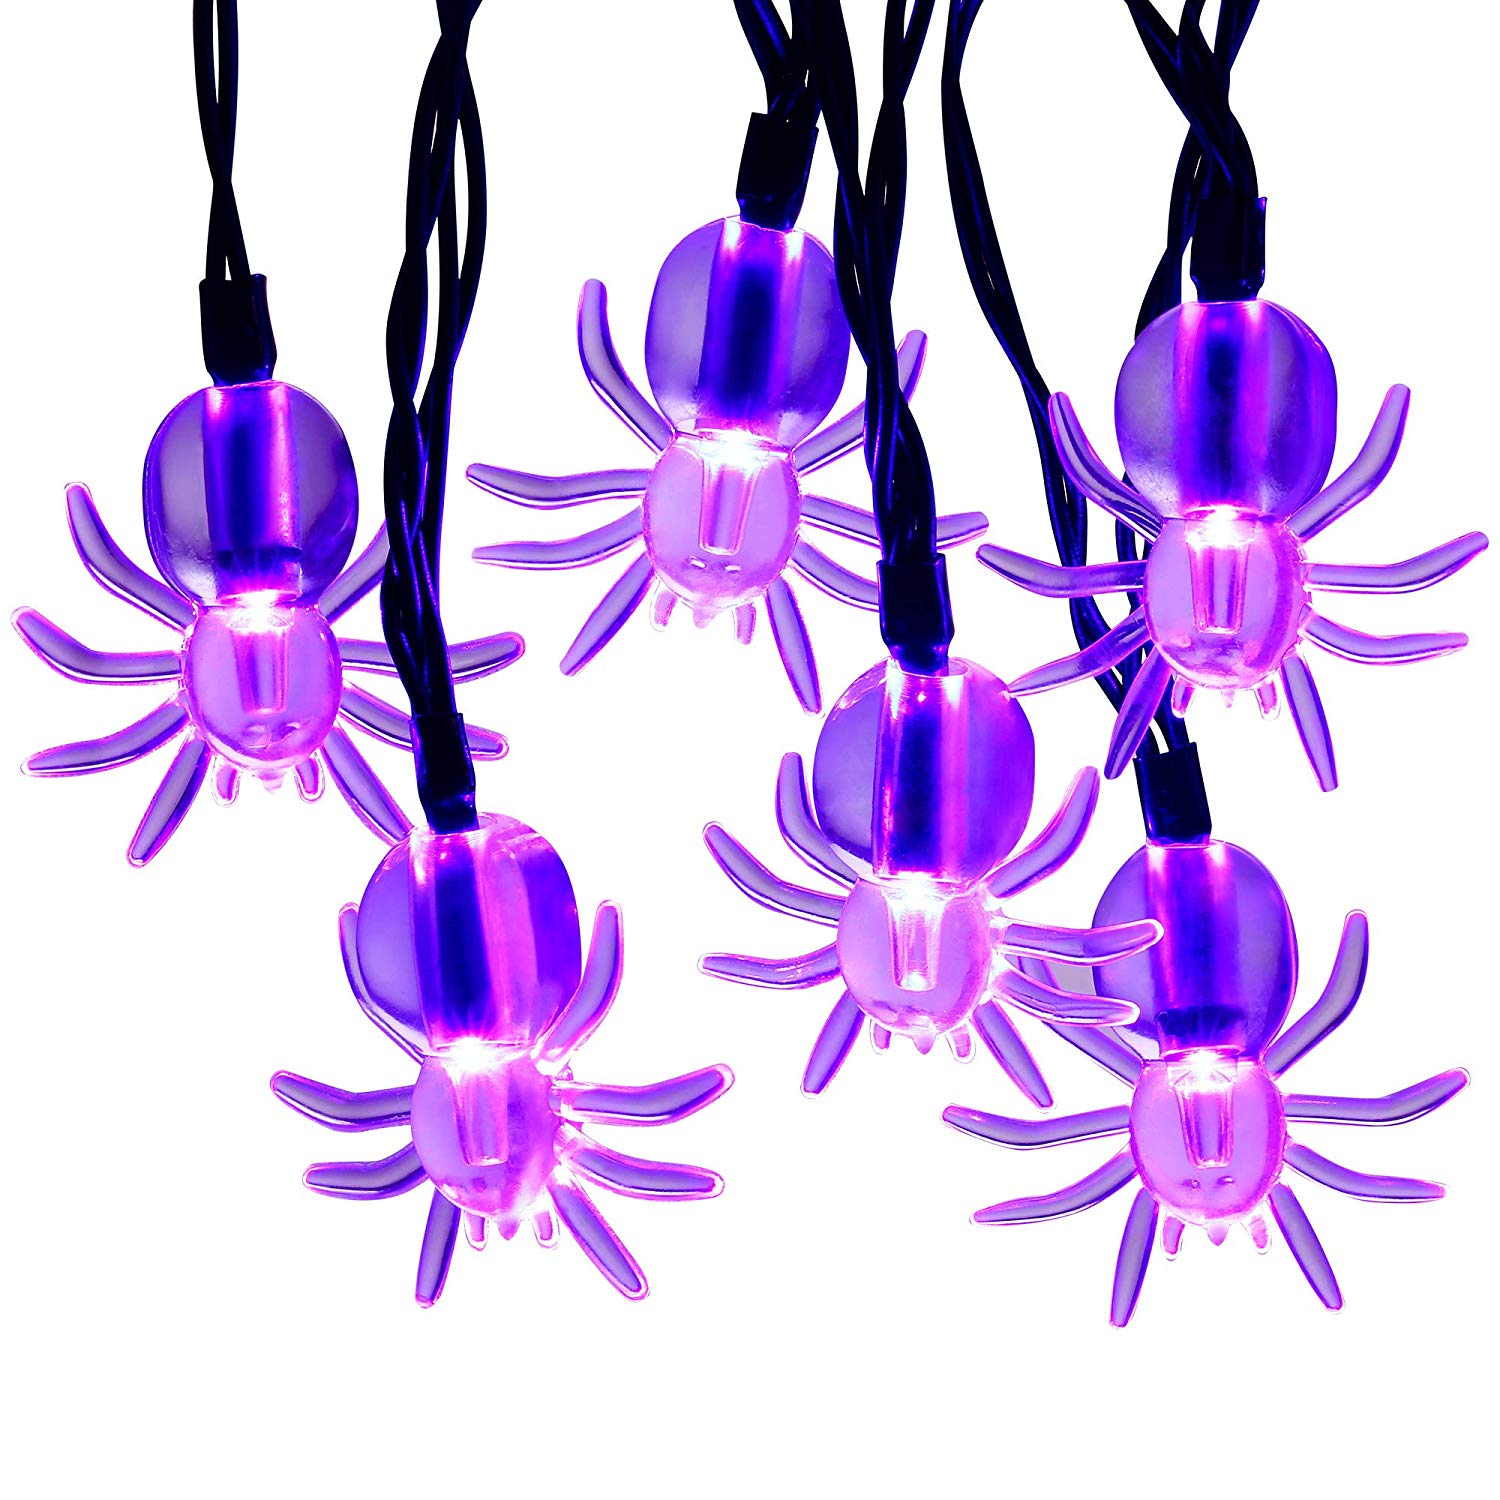 Purple Spider String Lights - 30 LED 11ft Battery Operated Halloween String Lights for Halloween Party Decor, Halloween Decoration, Halloween Lighting, House, Garden, Yard, Fireplace - image 2 of 6